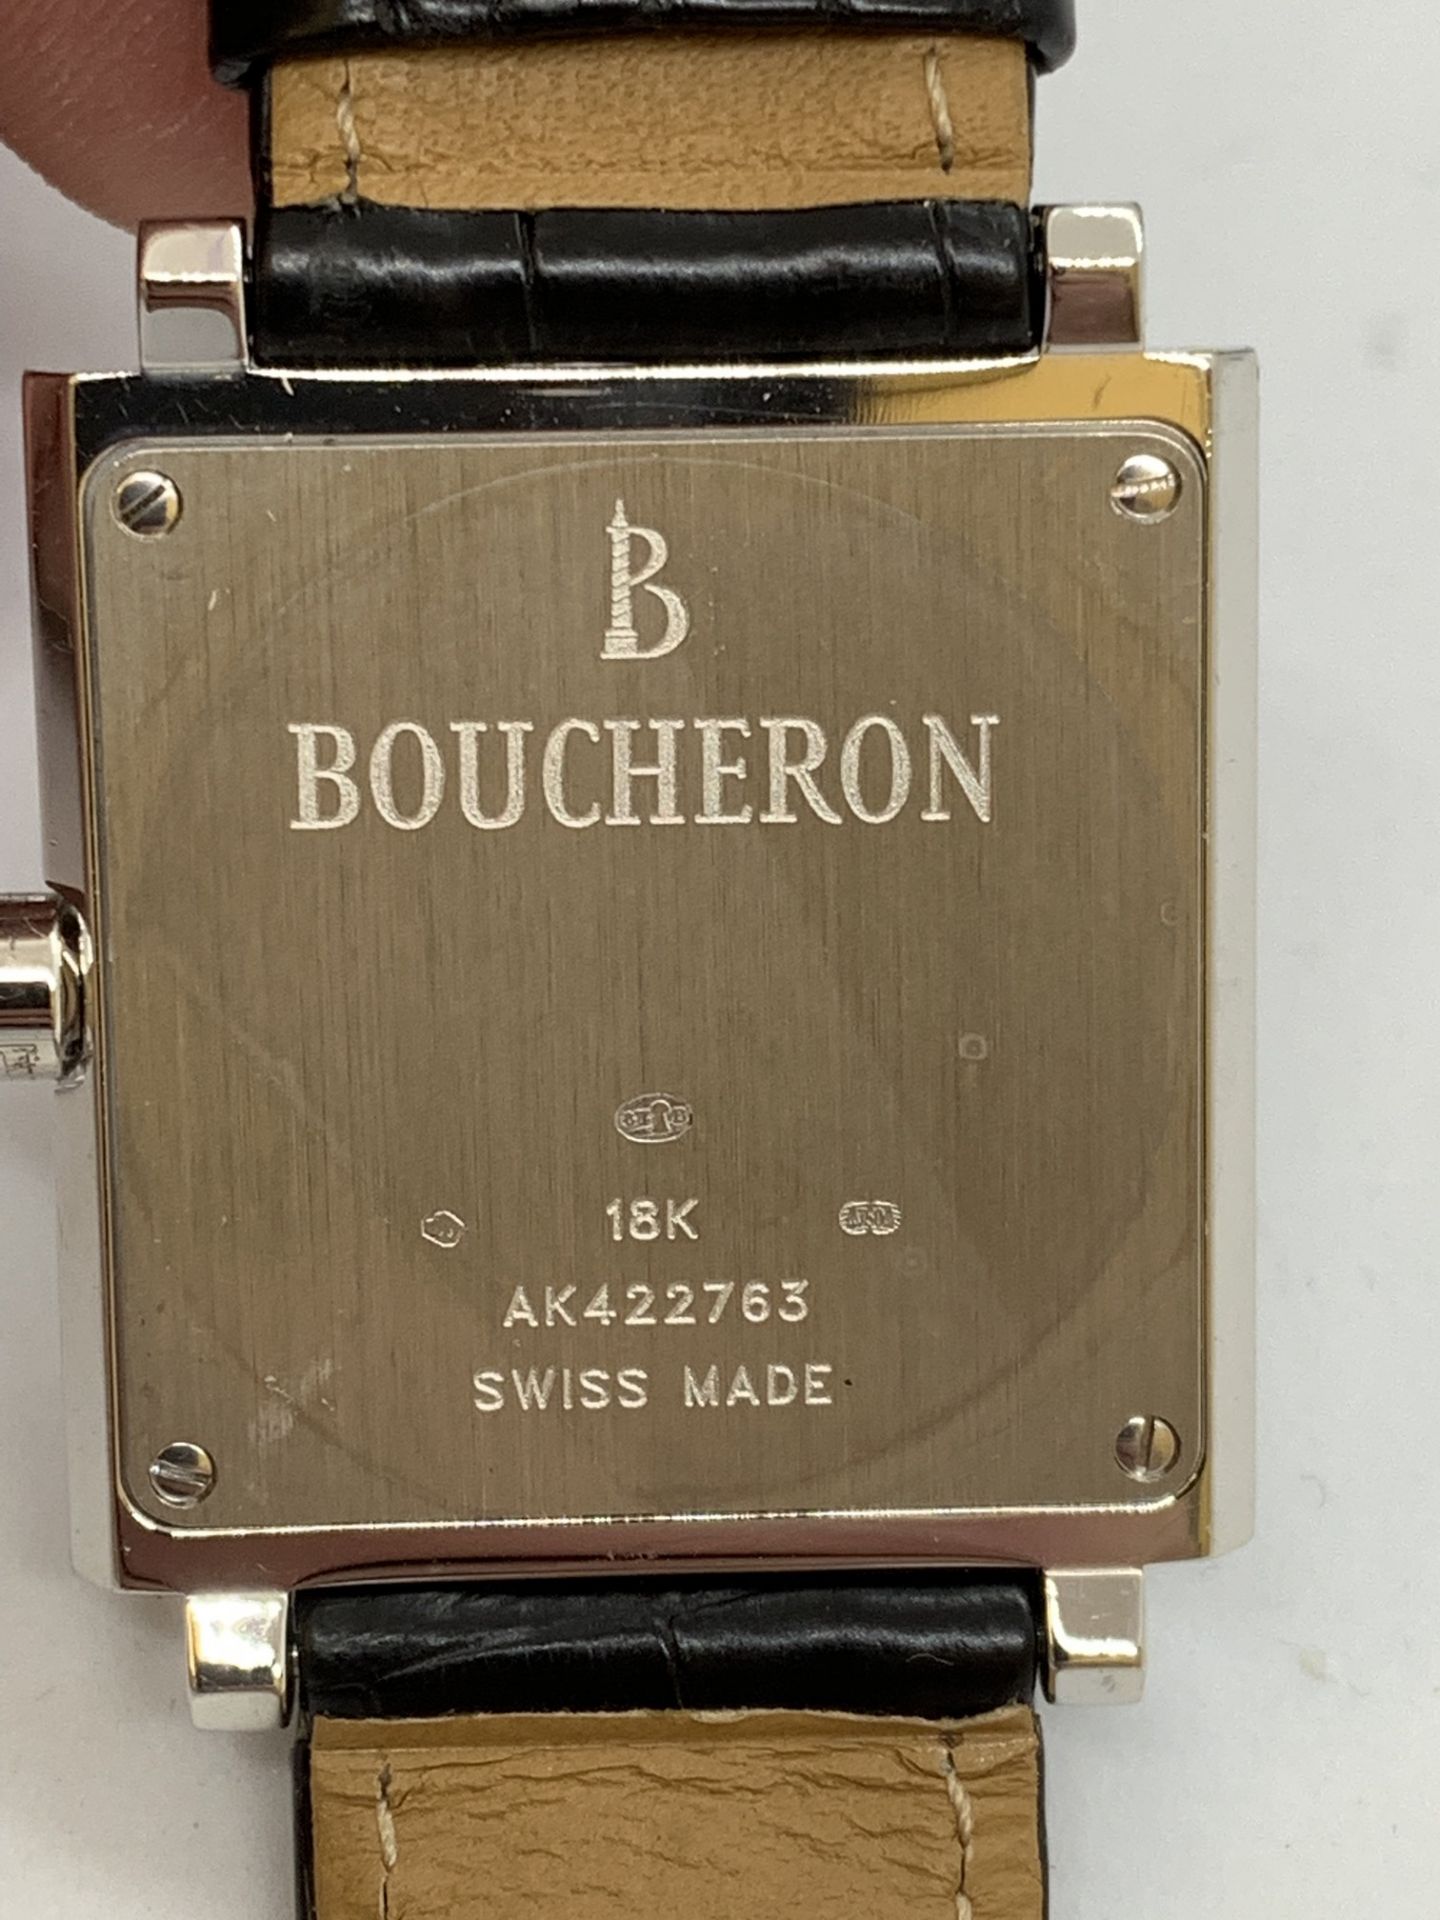 BOUCHERON 18ct GOLD & DIAMOND WATCH - Image 6 of 6